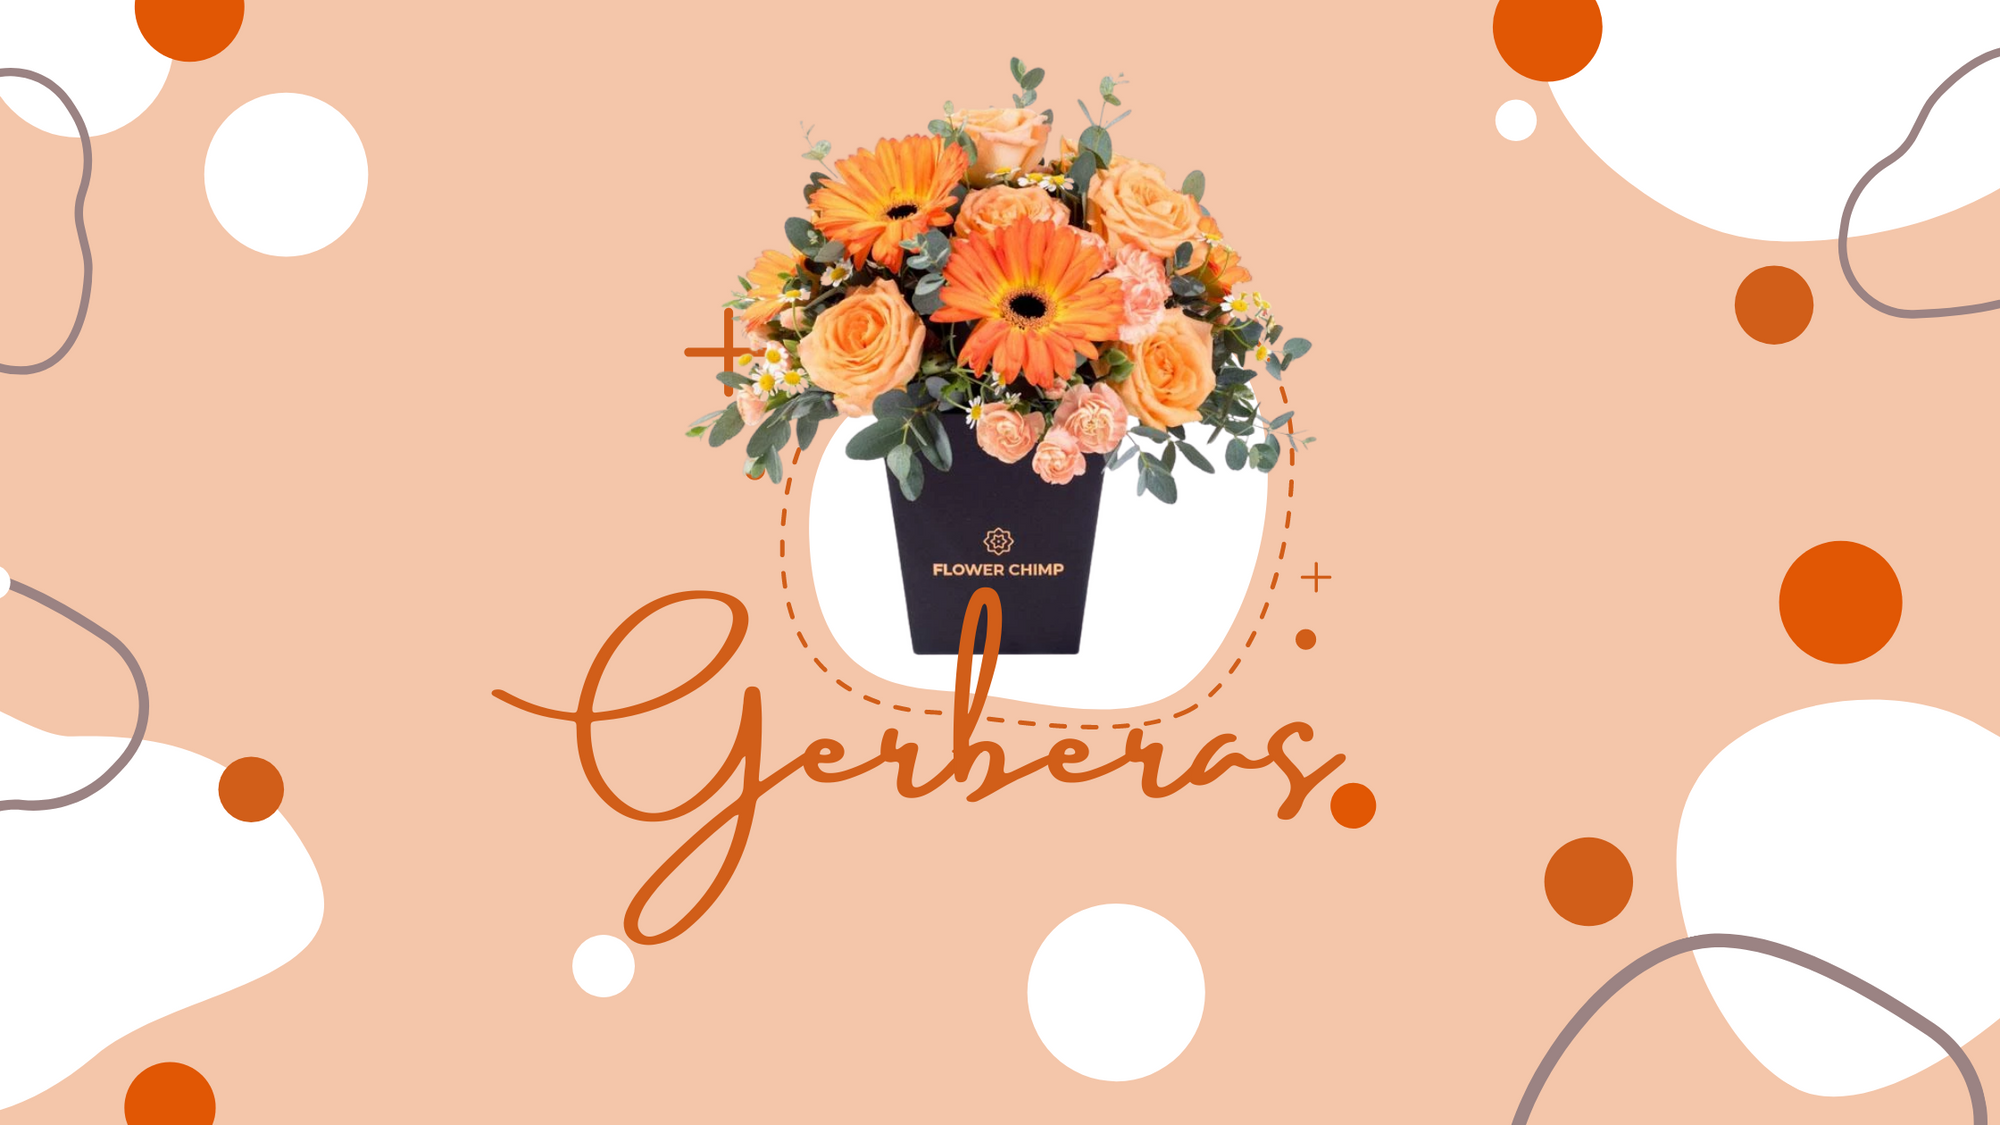 Gerbera Flower Bouquets_gerberas-flower-delivery